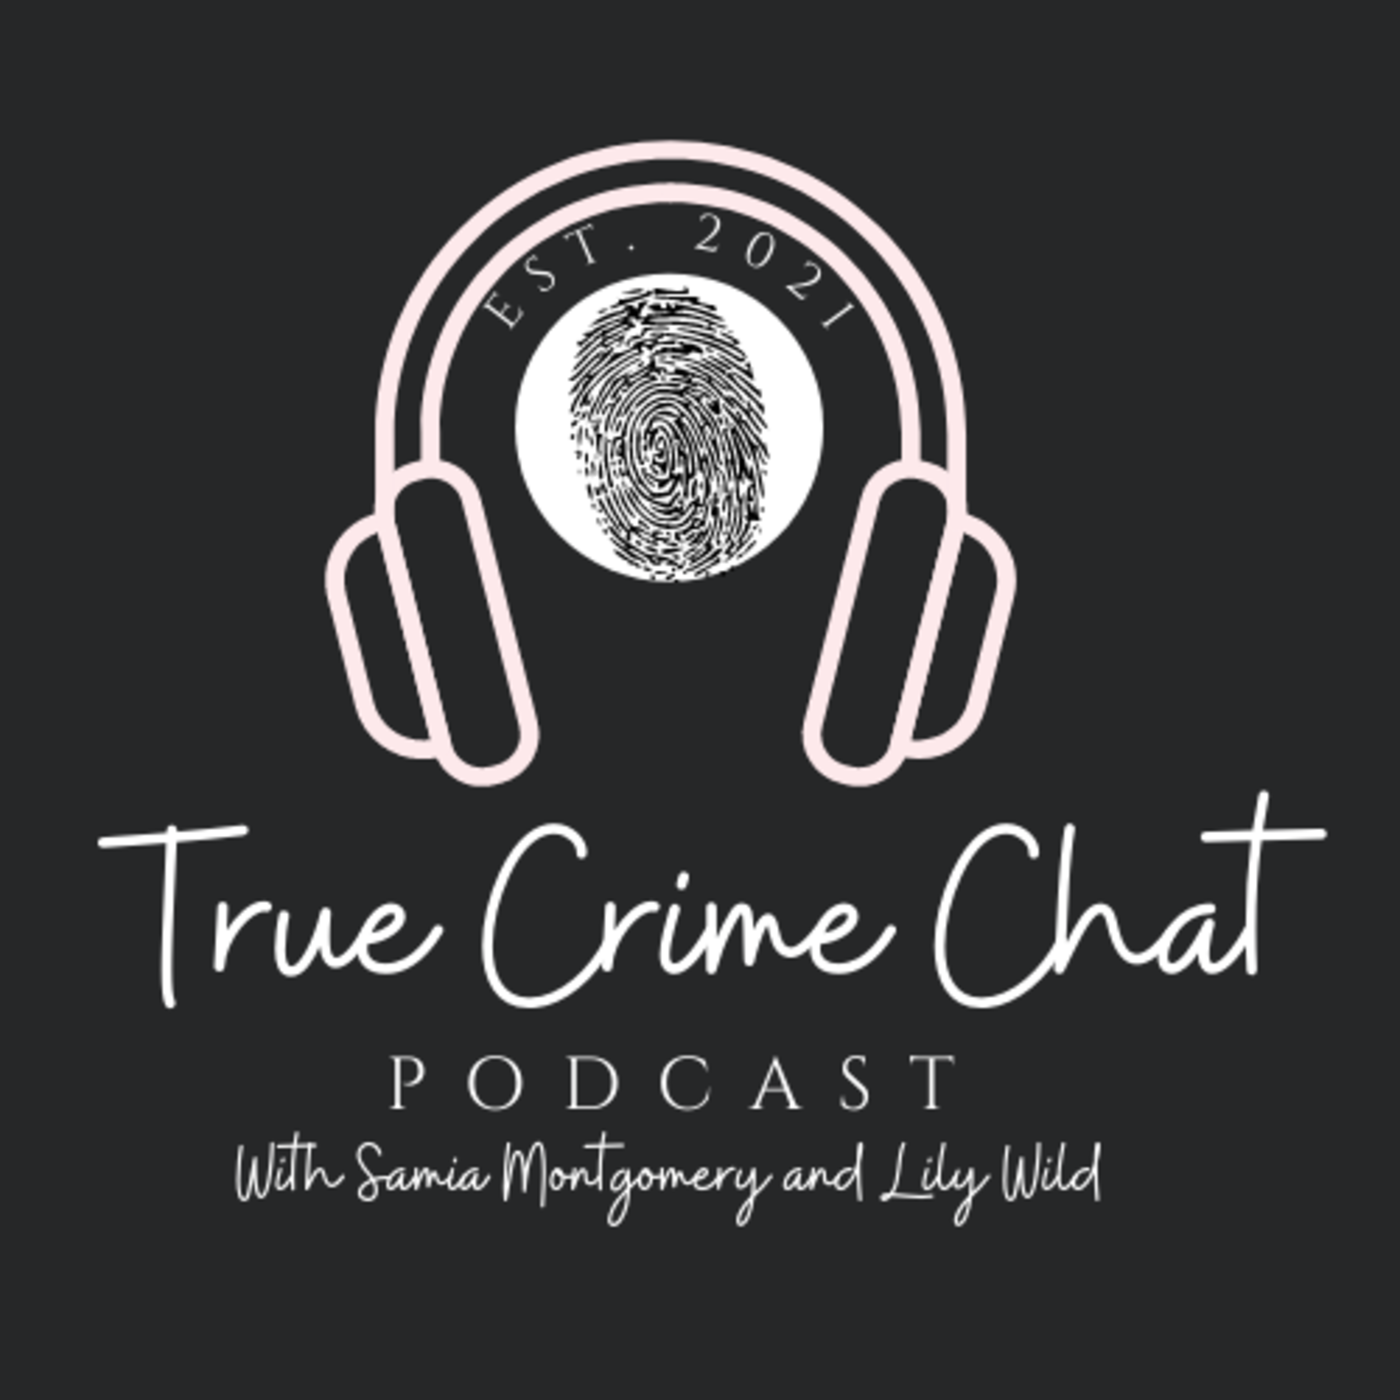 True Crime Chat